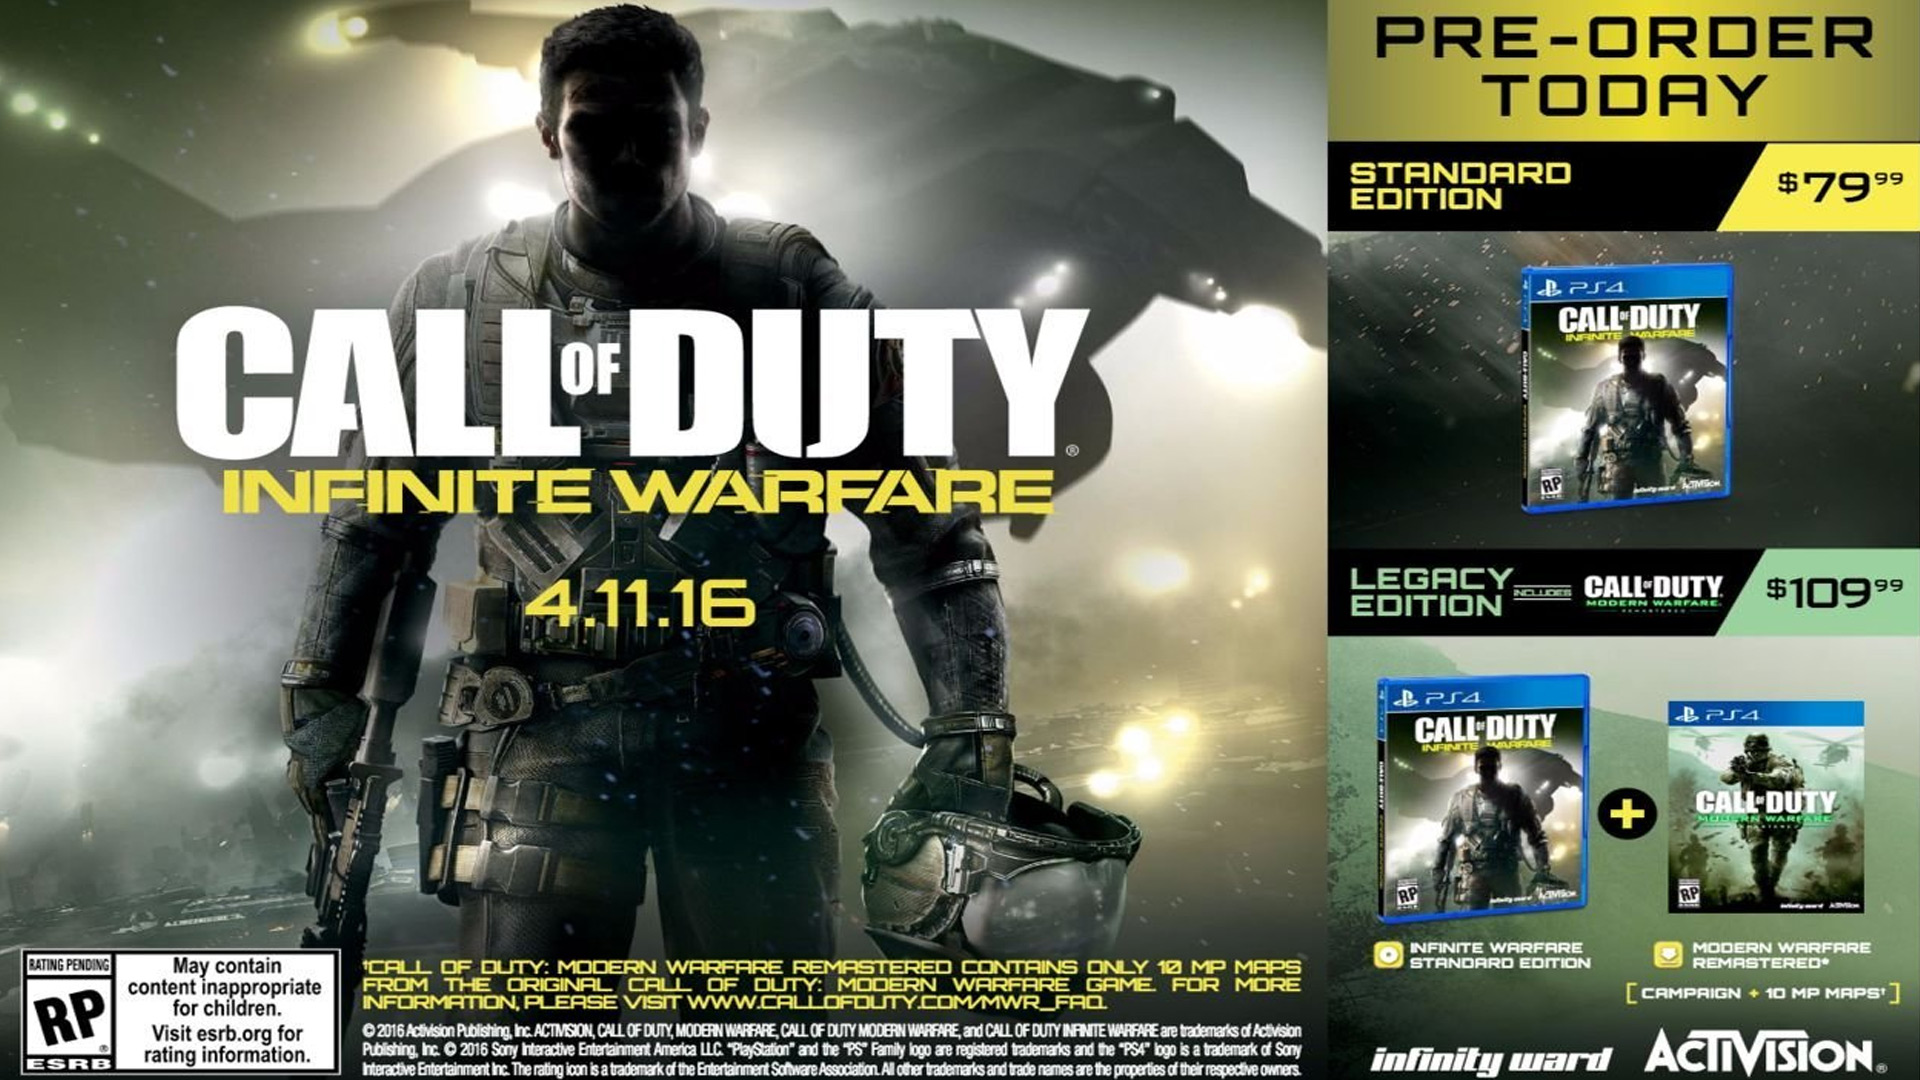 Un teaser de Call of Duty Infinite Warfare, la promo... ¿Ya era hora?